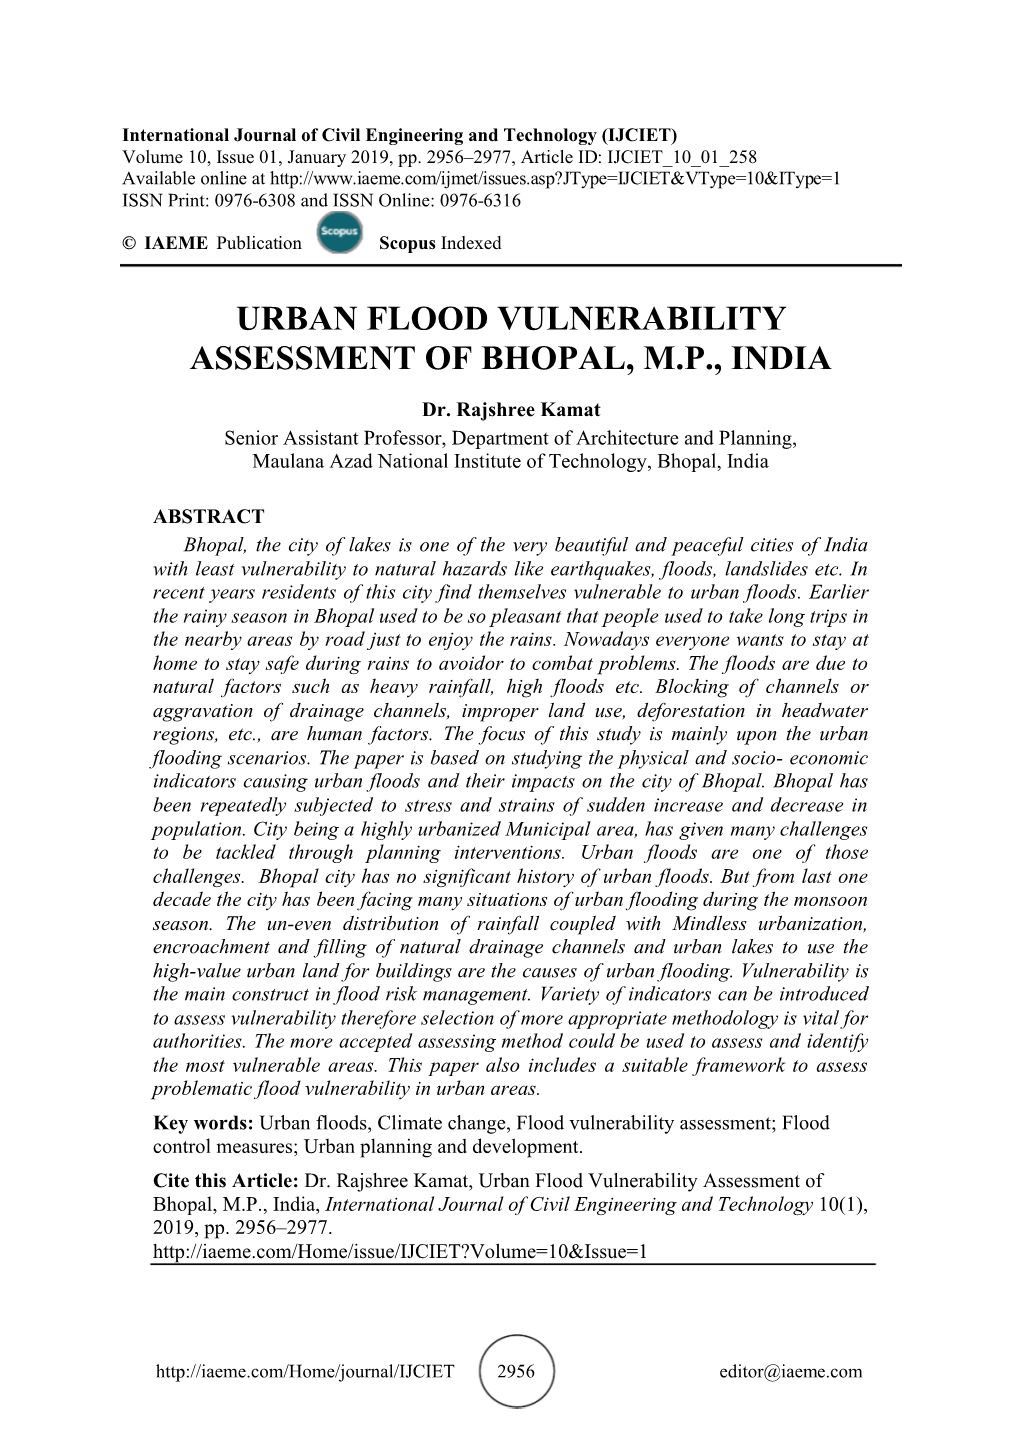 Urban Flood Vulnerability Assessment of Bhopal, M.P., India